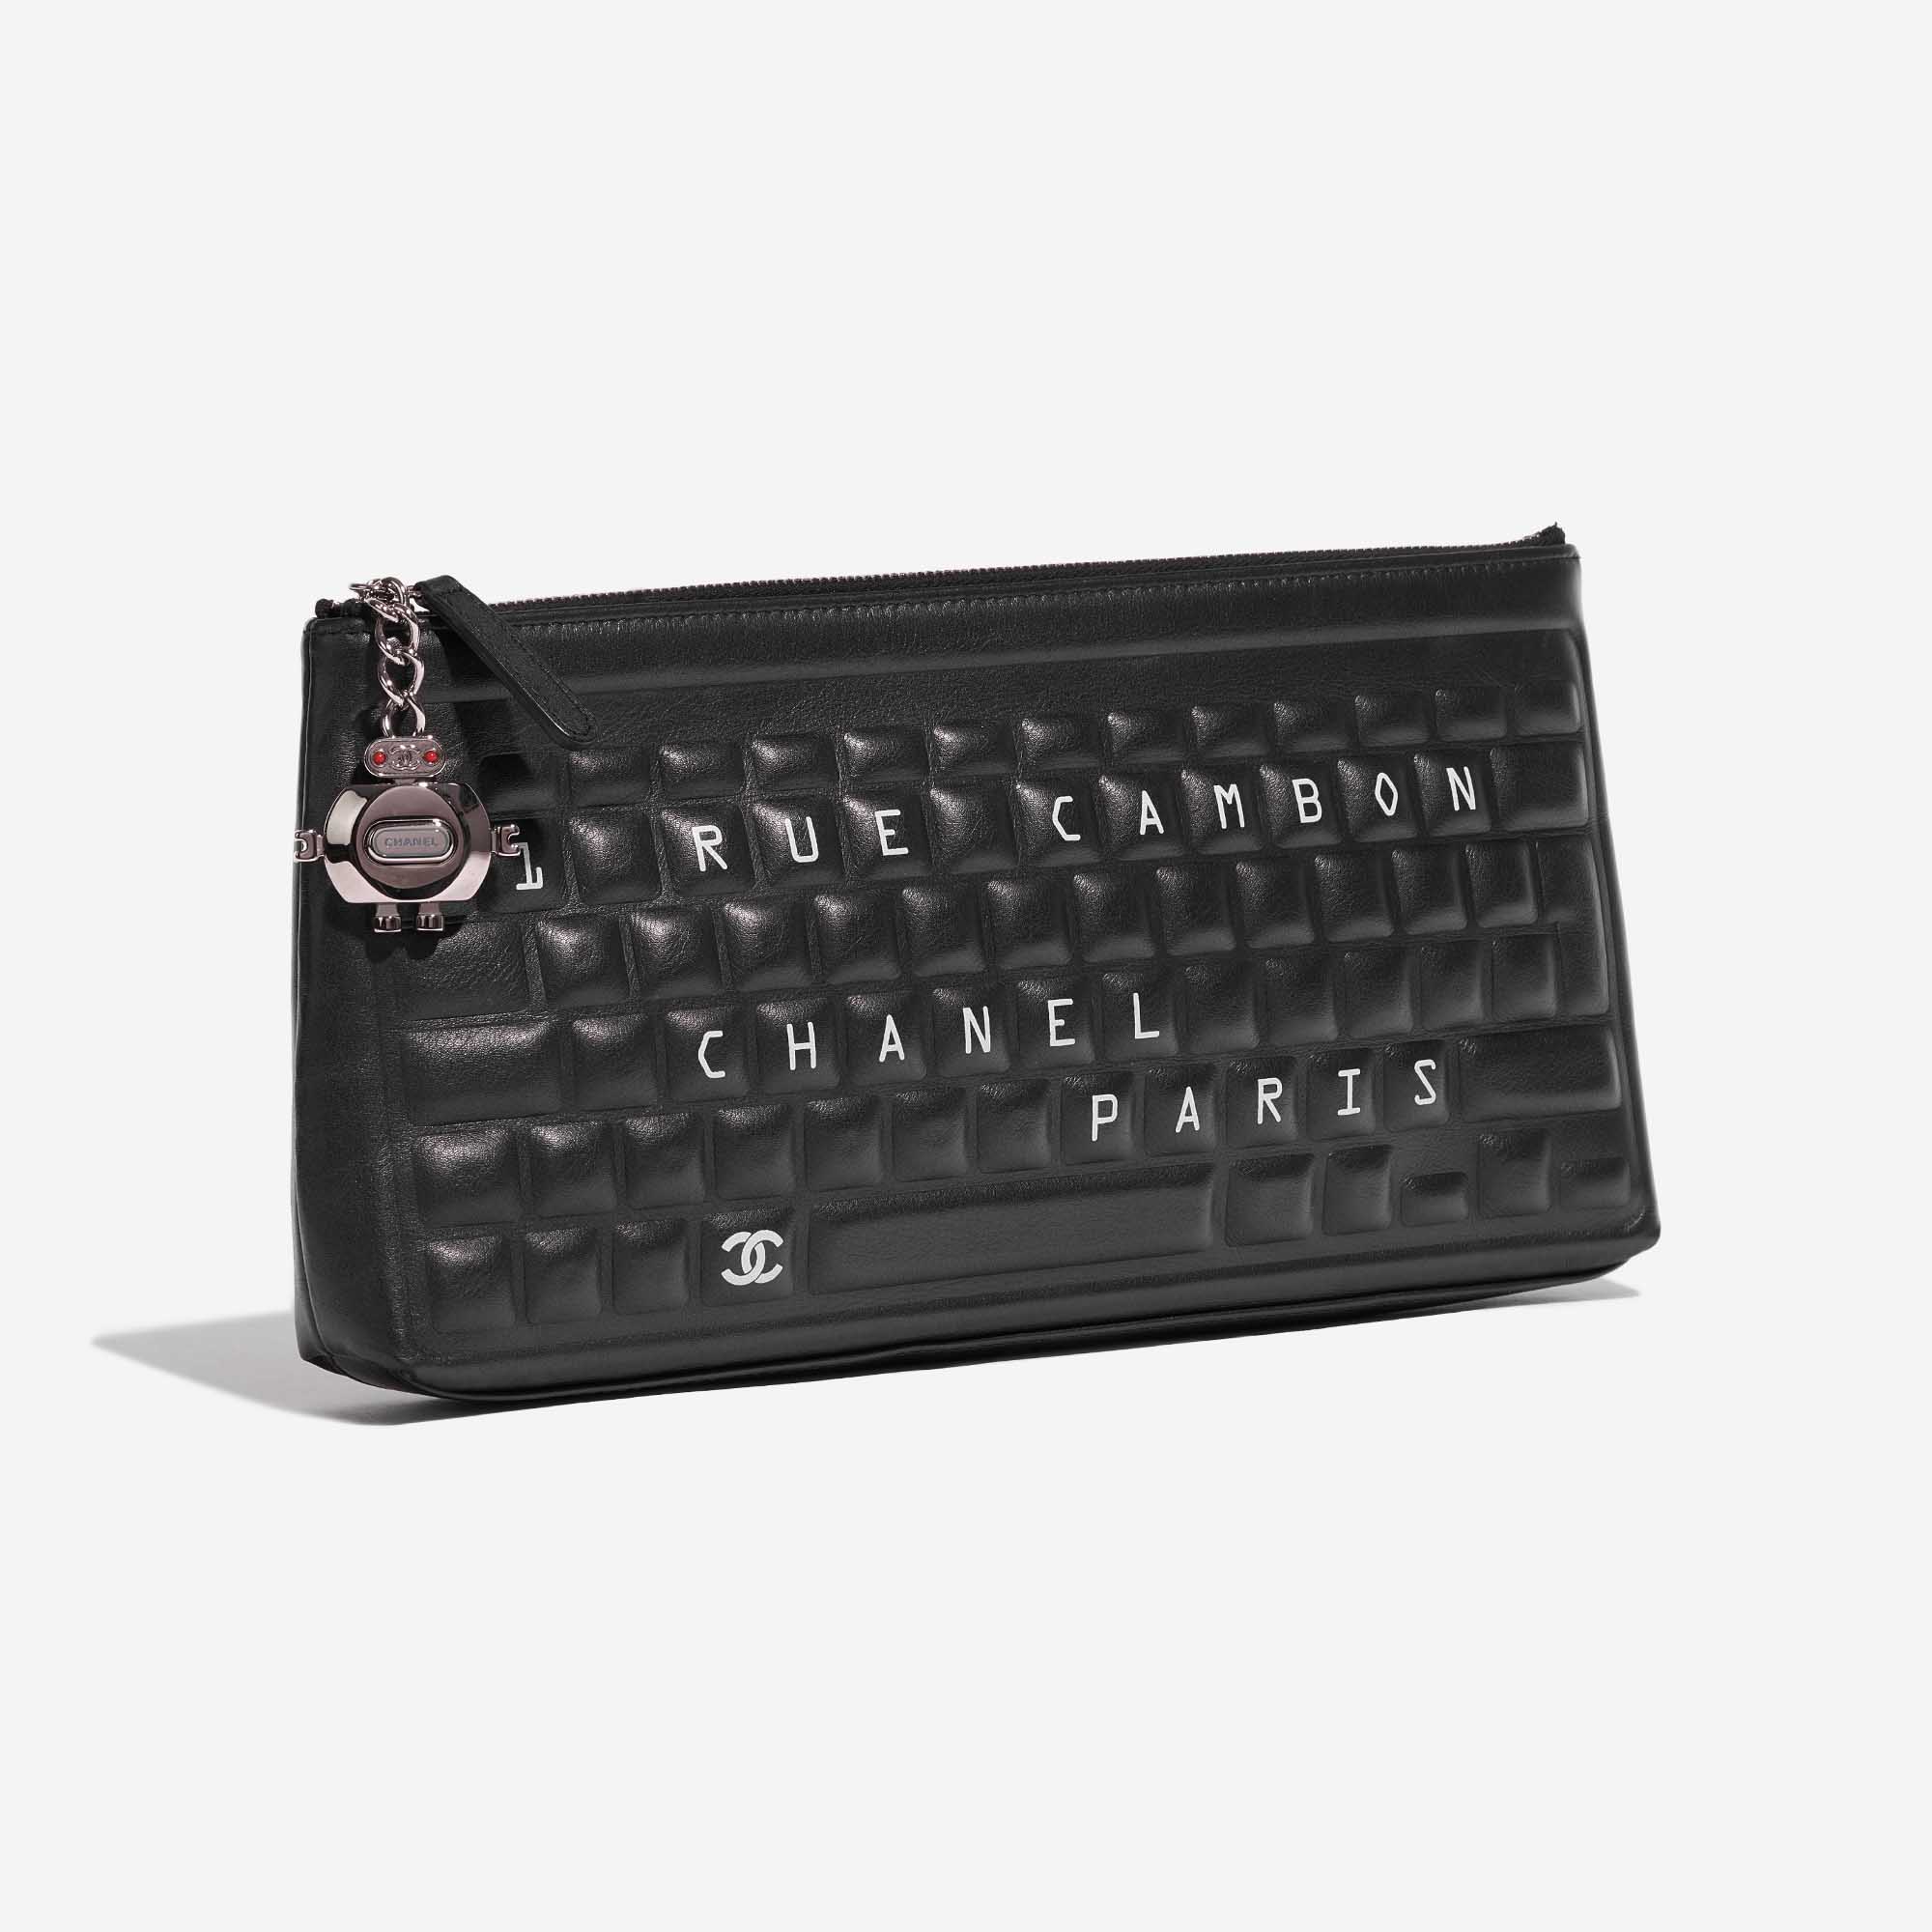 CHANEL, Bags, Chanel Keyboard Clutch